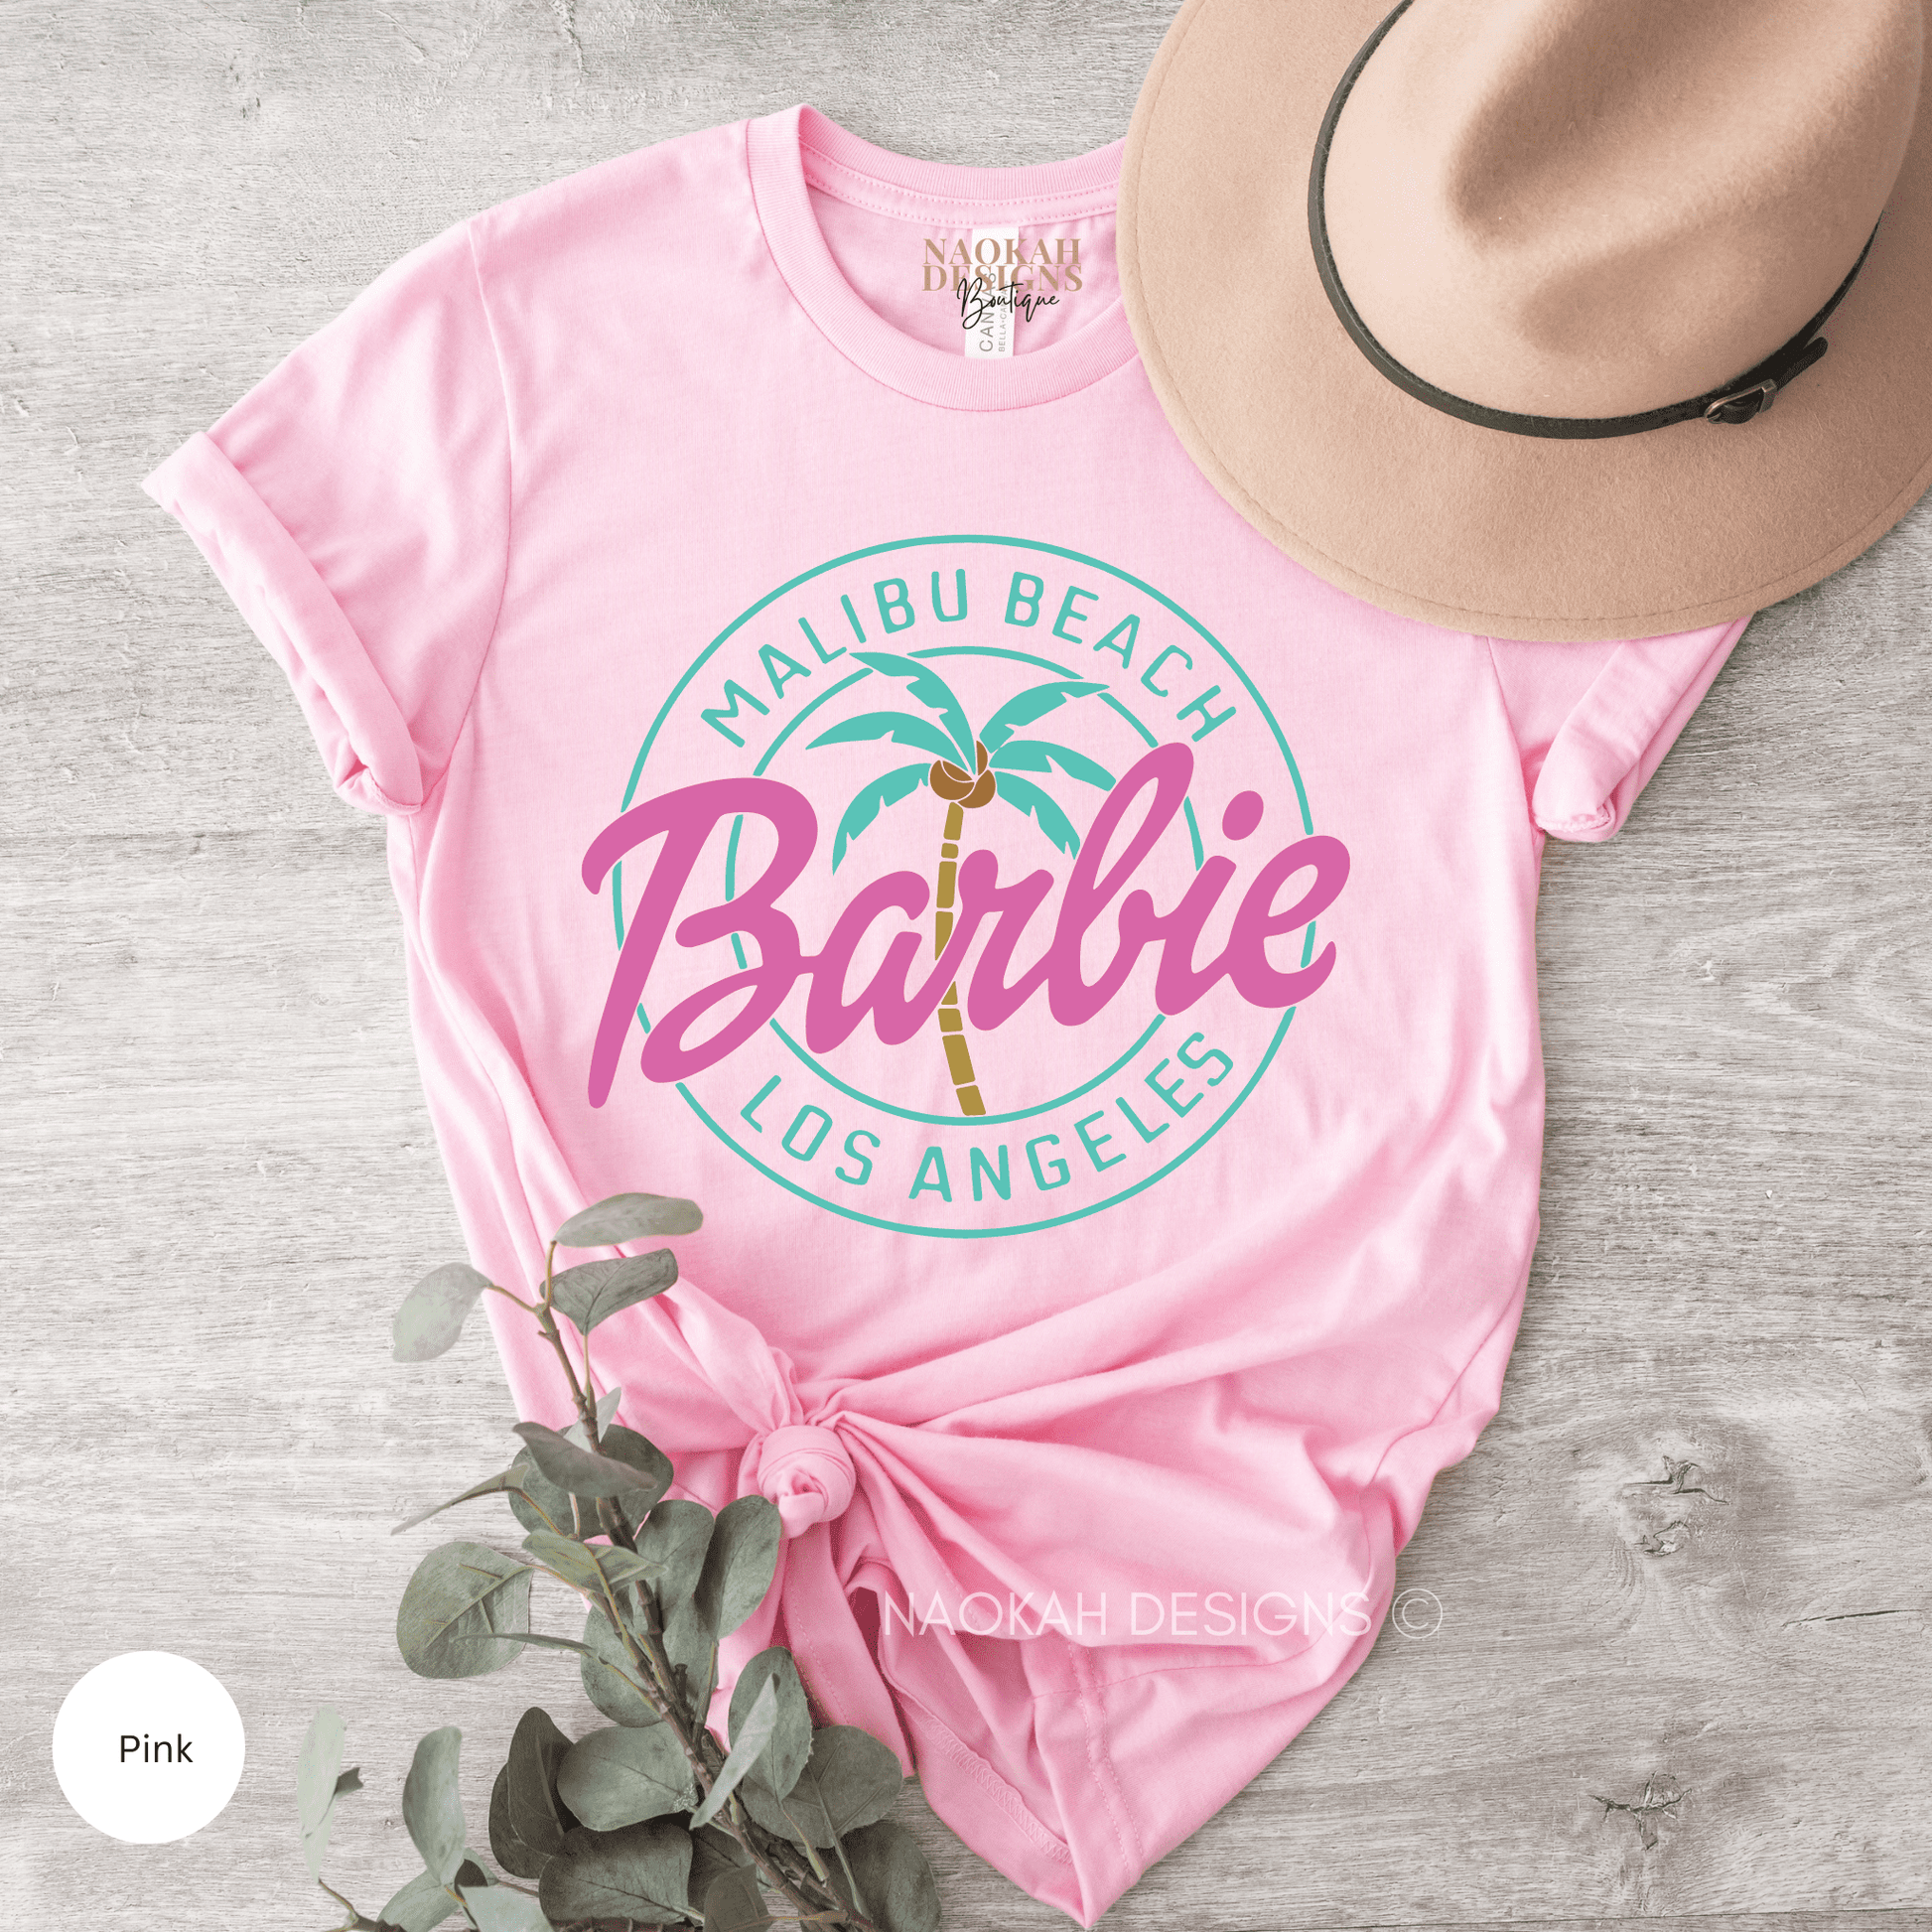 Malibu beach los angeles barbie shirt